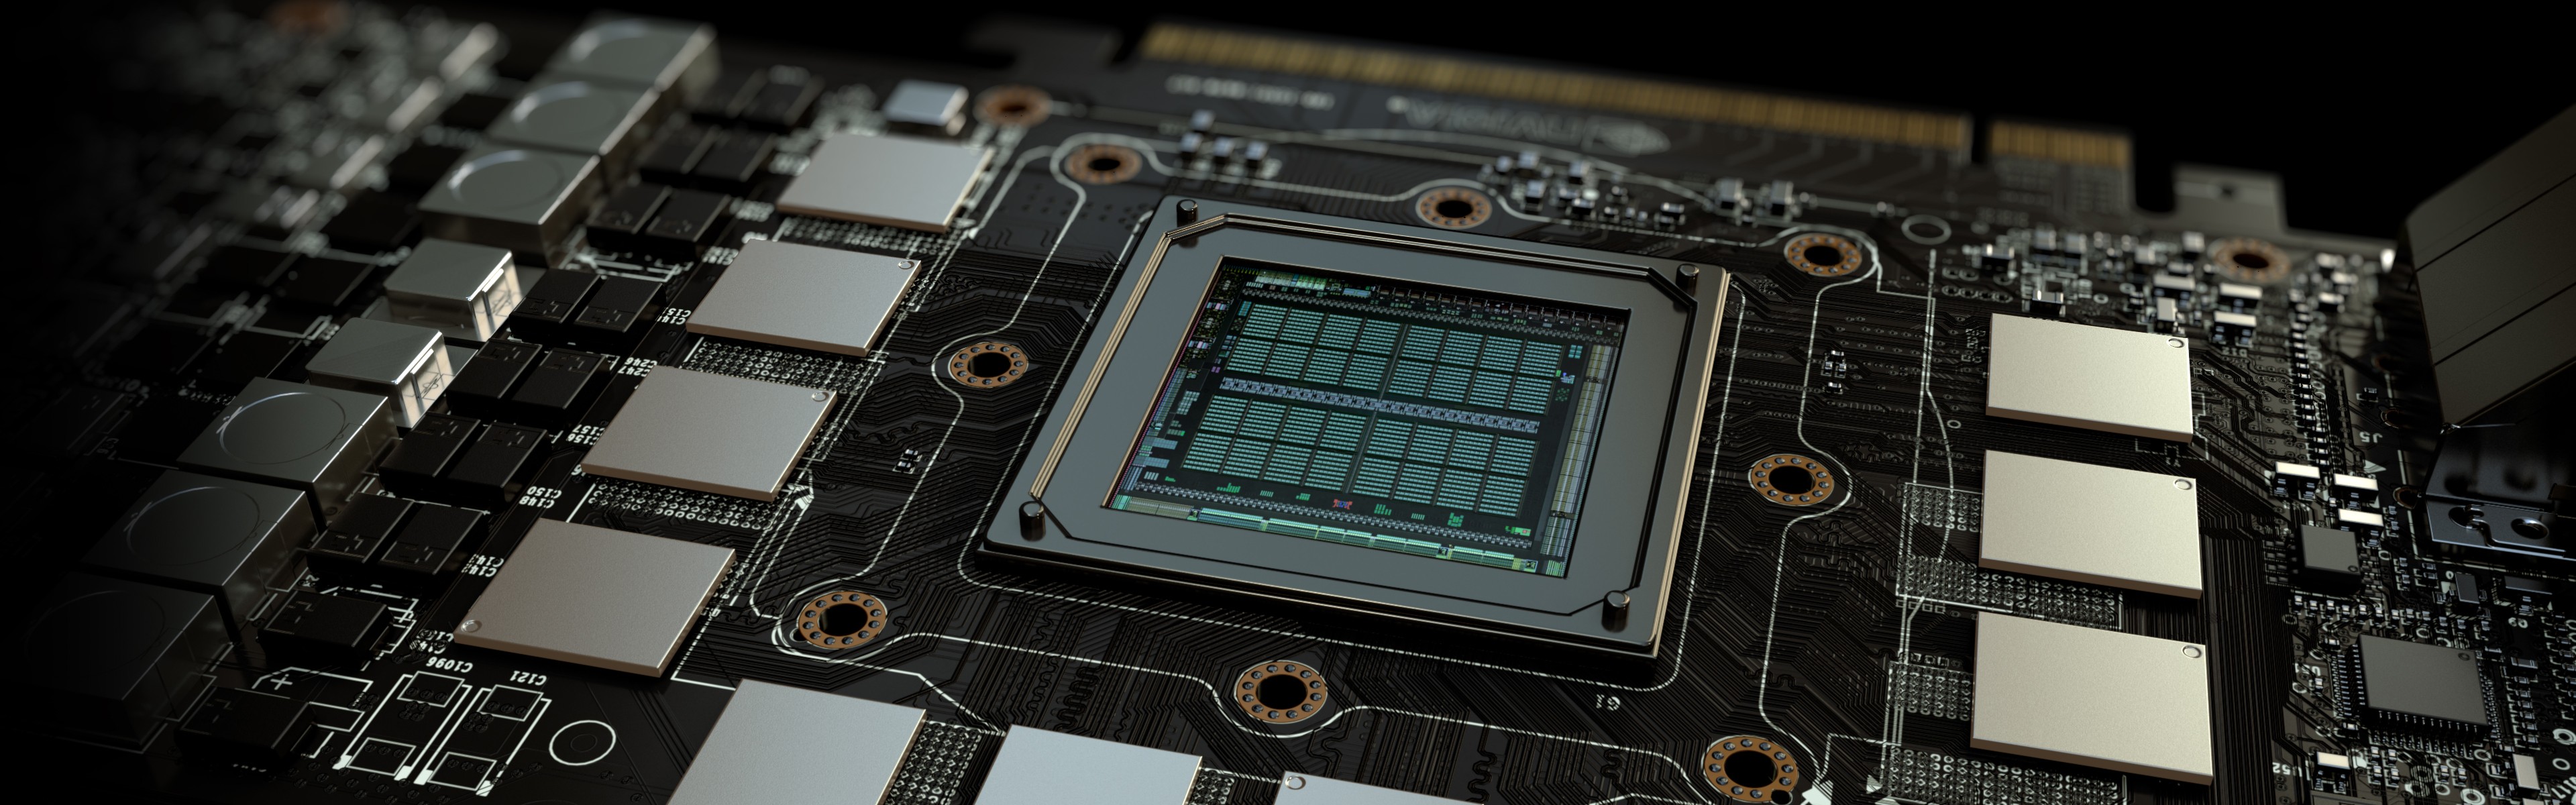 Nvidia GPUs Technology PC Gaming Multiple Display Graphics Card Dual Monitors 3840x1200